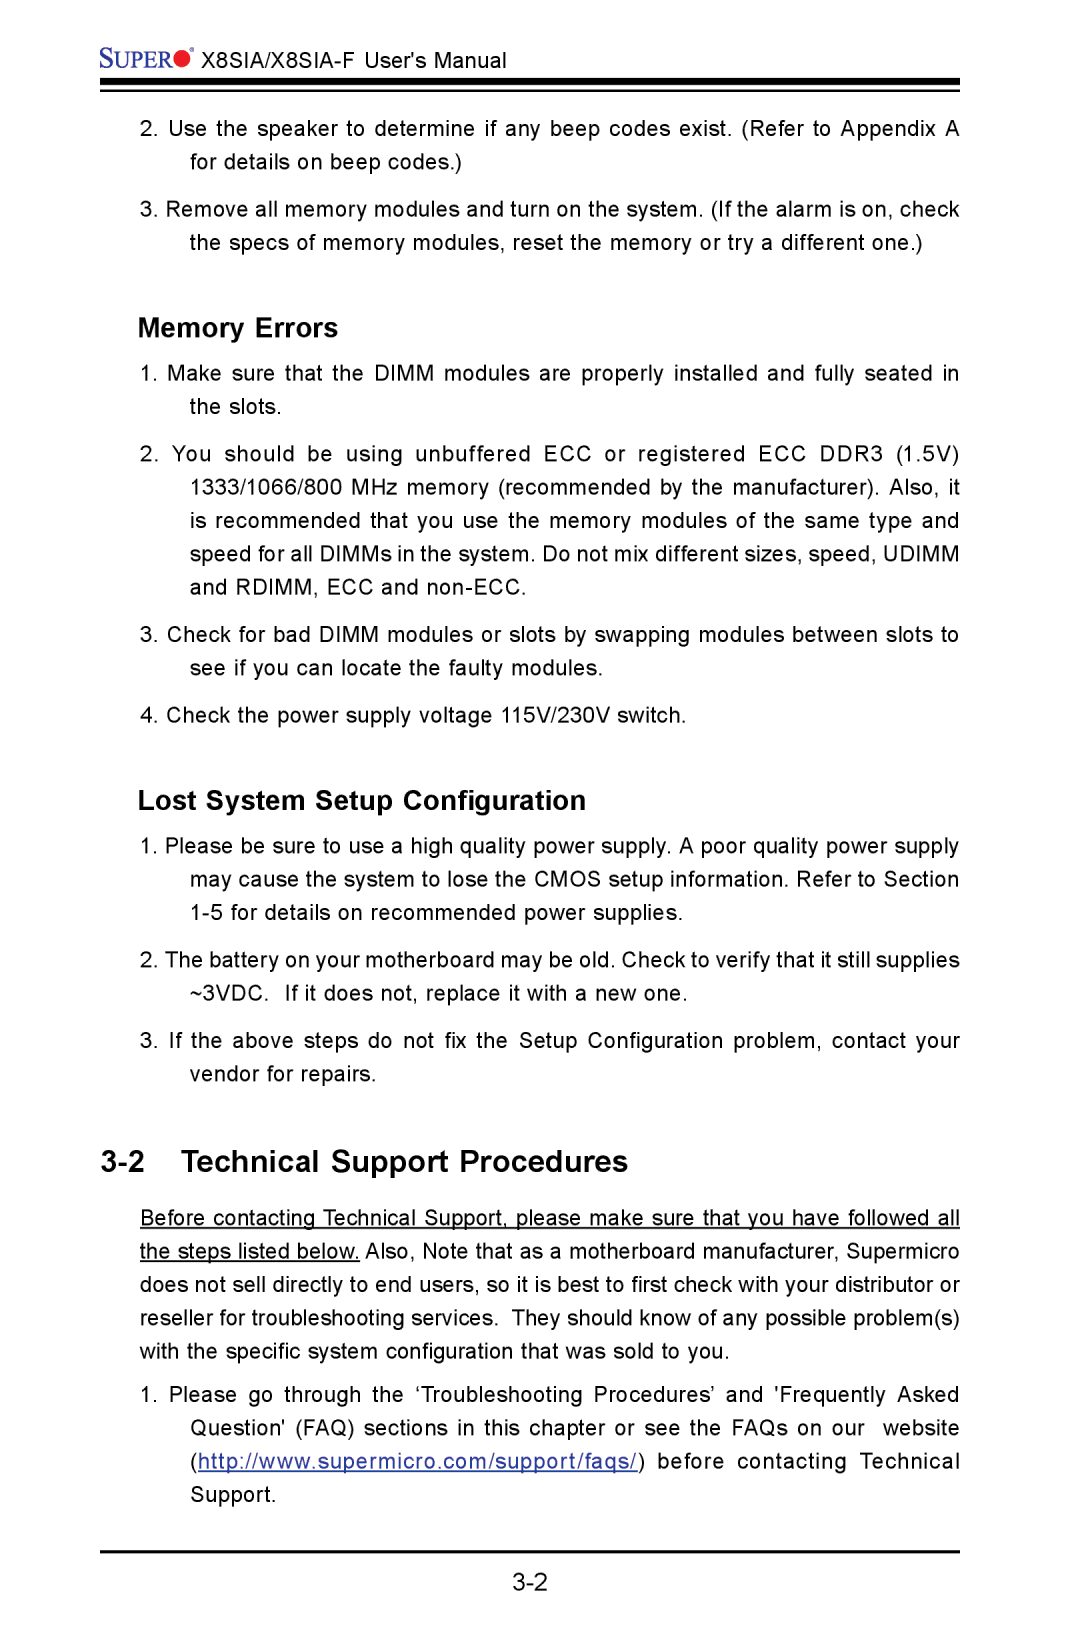 SUPER MICRO Computer X8SIA-F user manual Technical Support Procedures, Memory Errors, Lost System Setup Configuration 